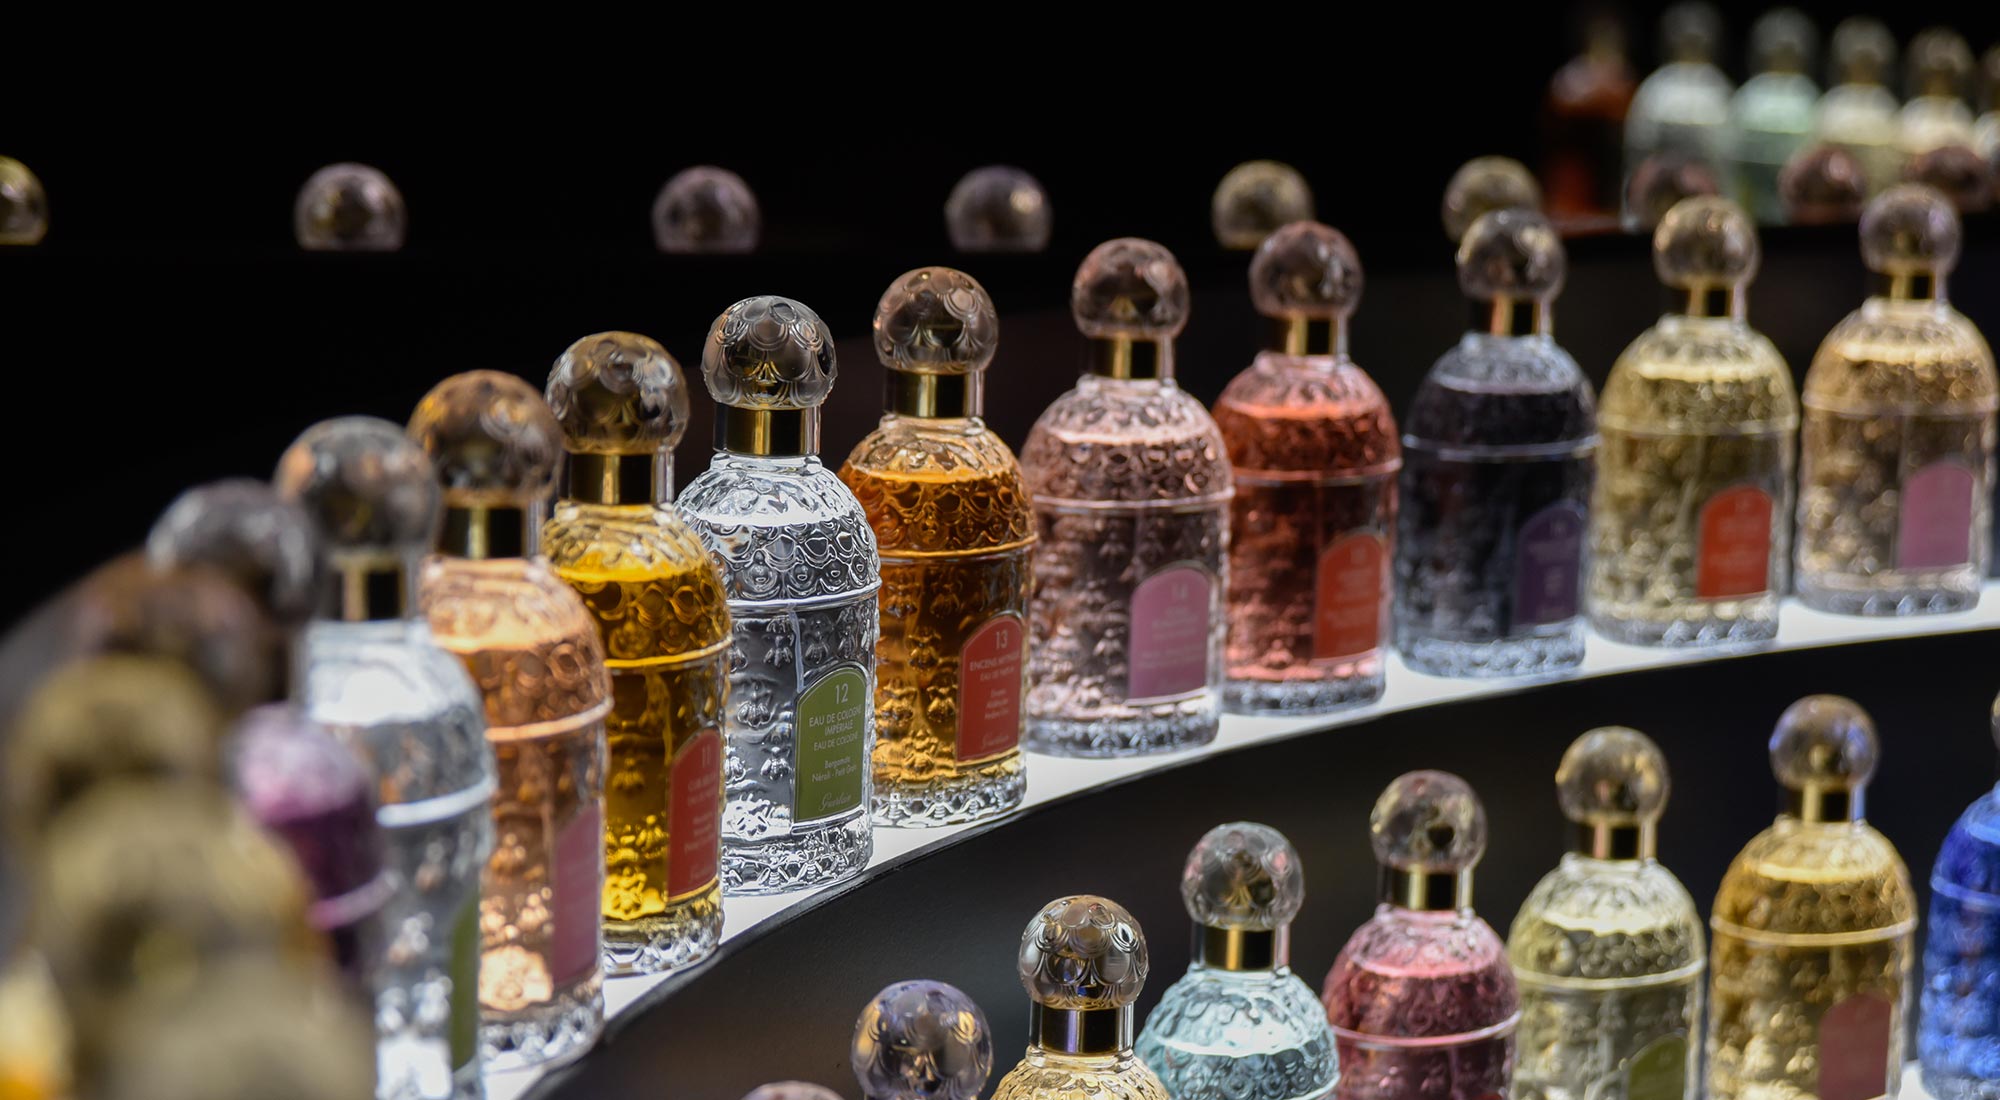 Guerlain launches exclusive fragrance - LVMH